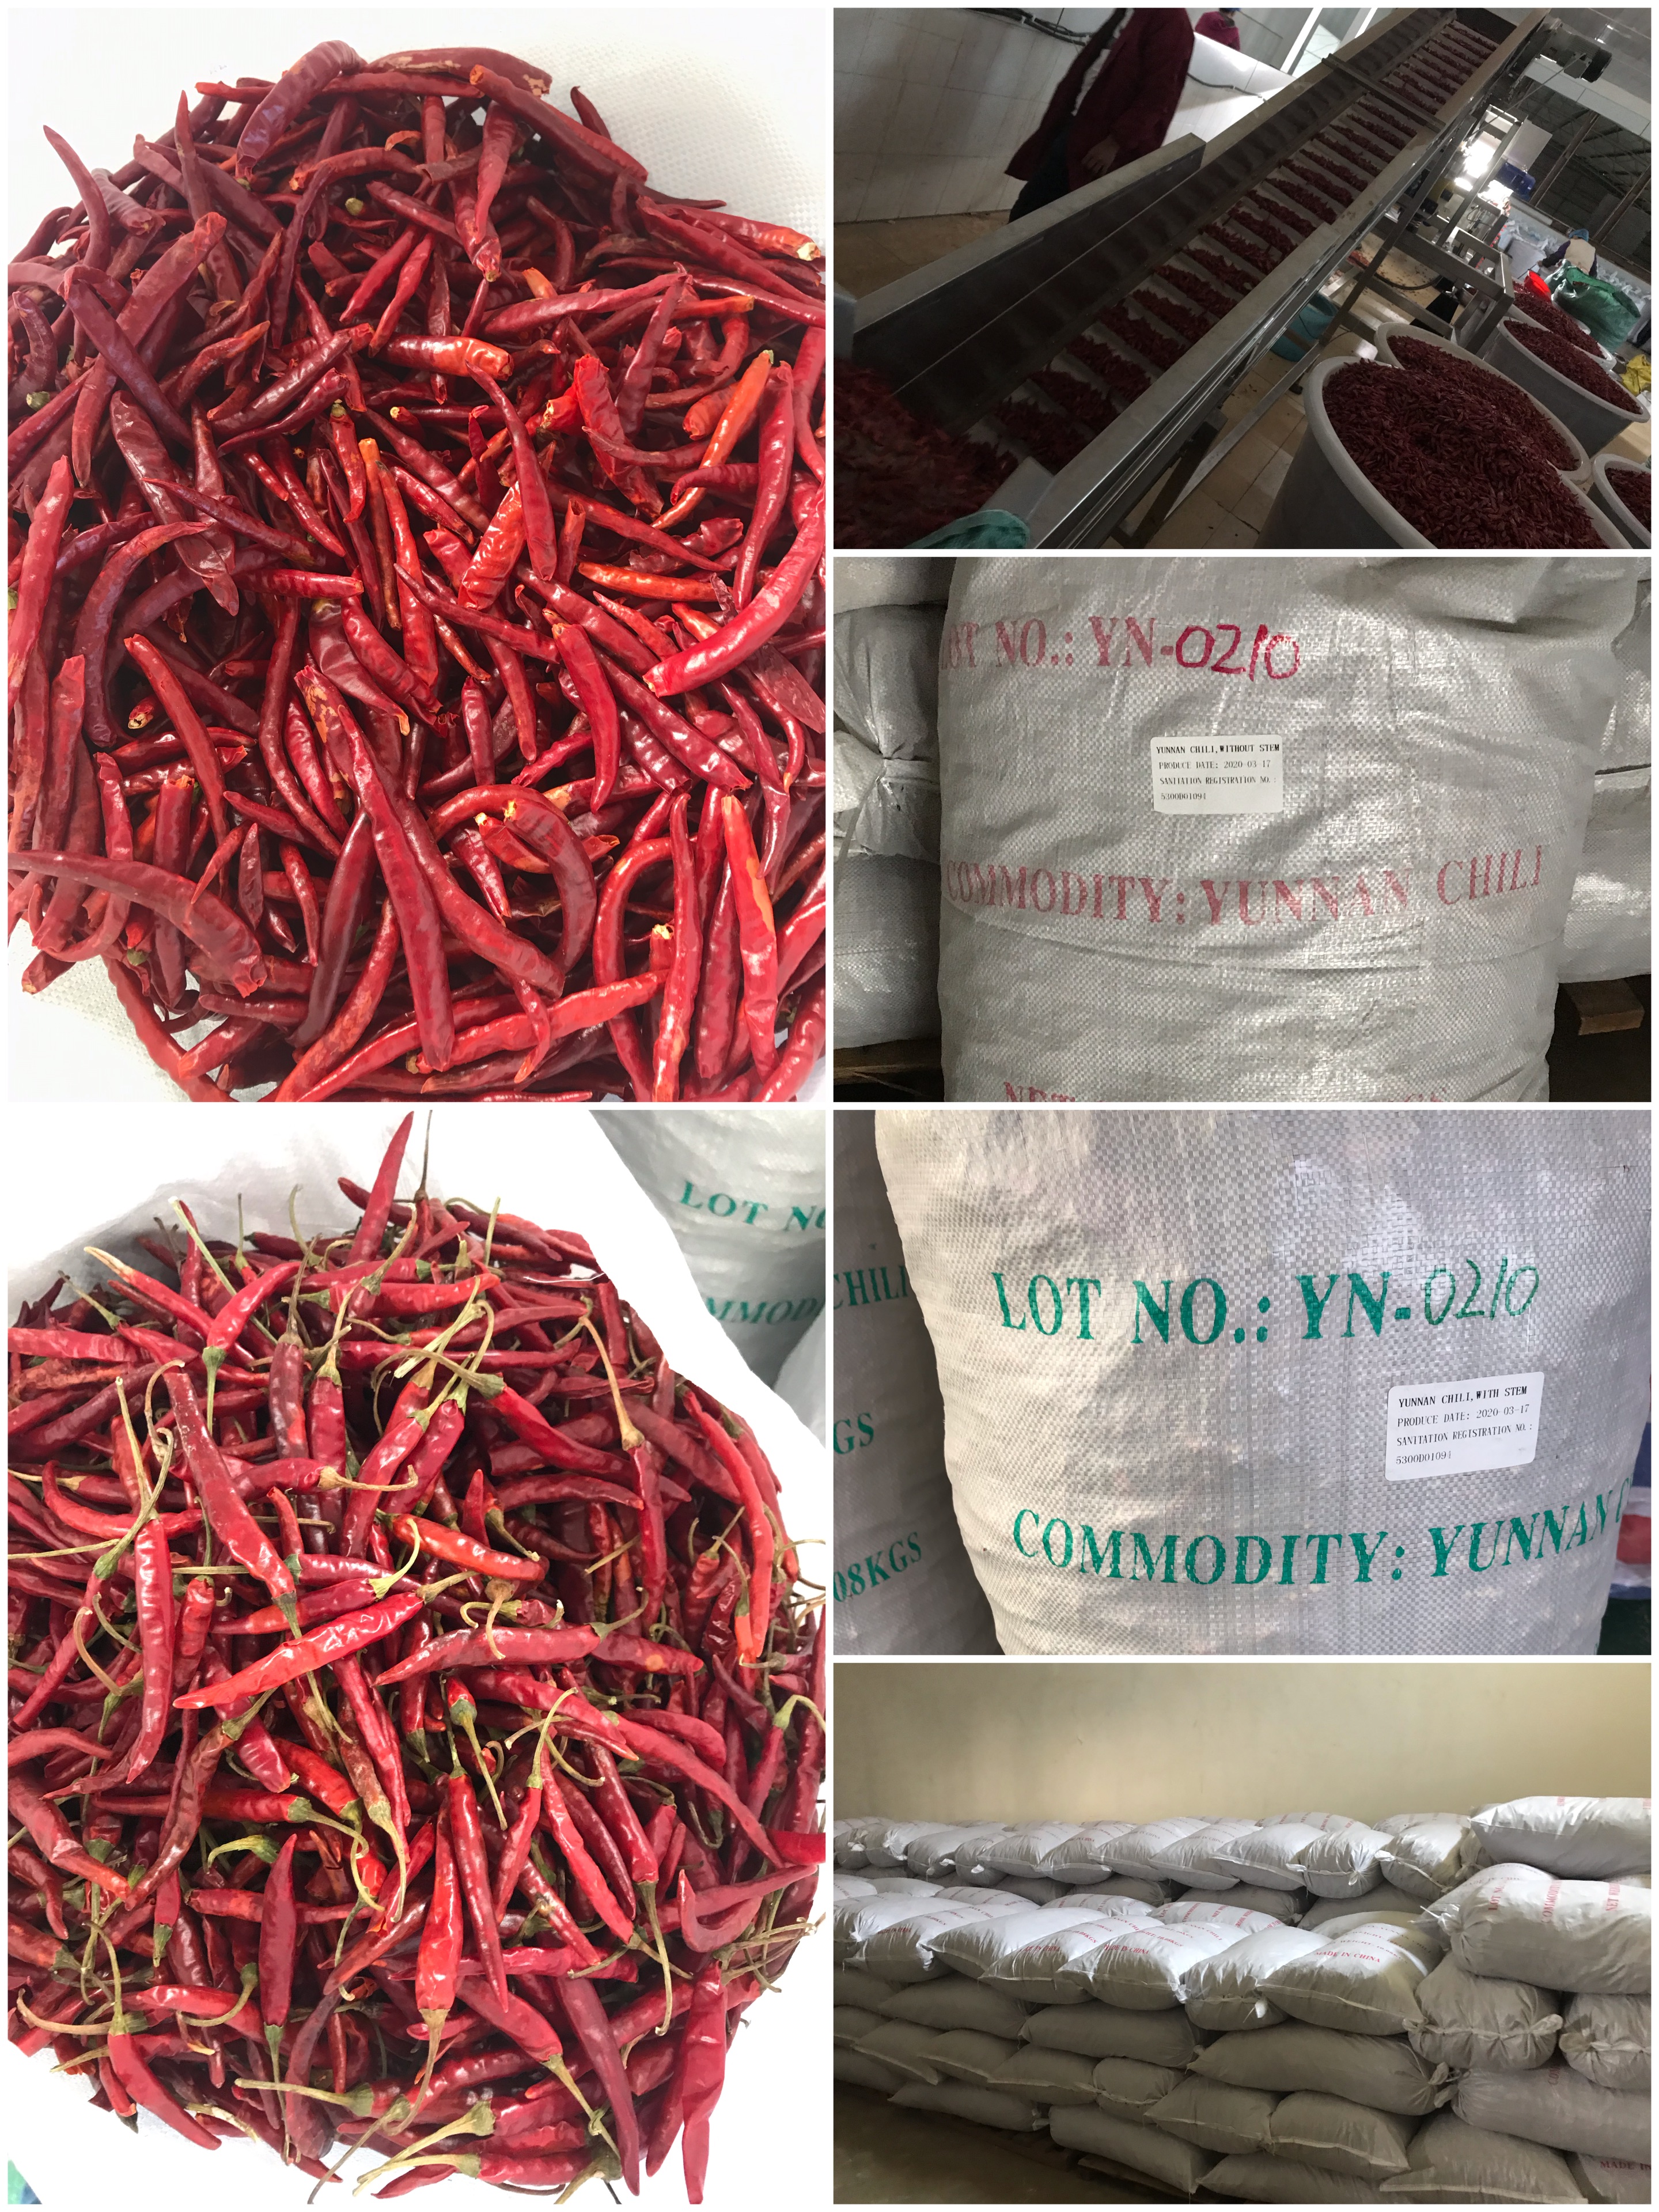 crop 2019 Yunnan chili in processing